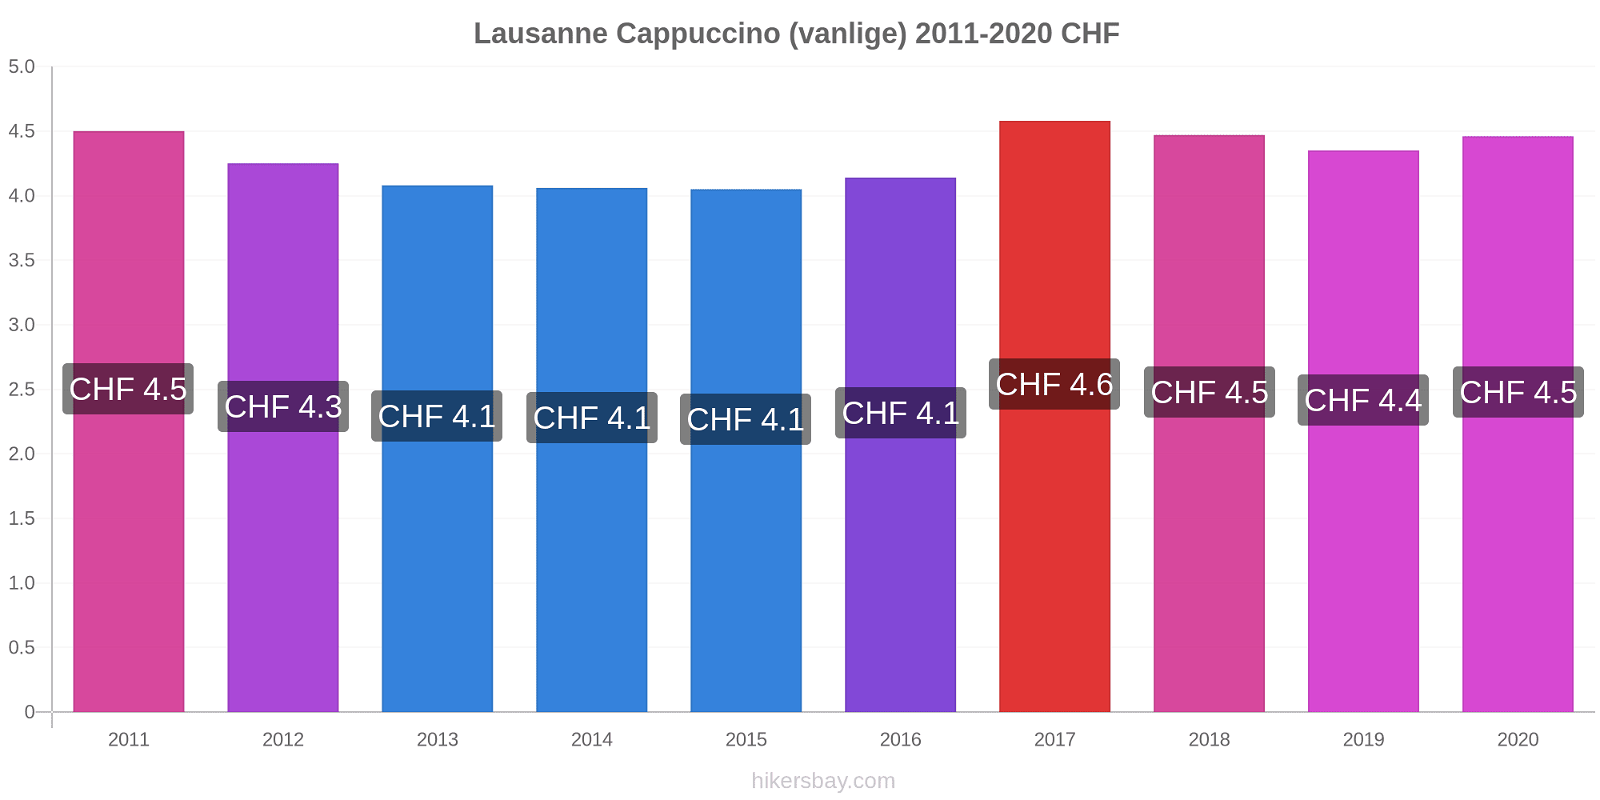 Lausanne prisendringer Cappuccino (vanlige) hikersbay.com